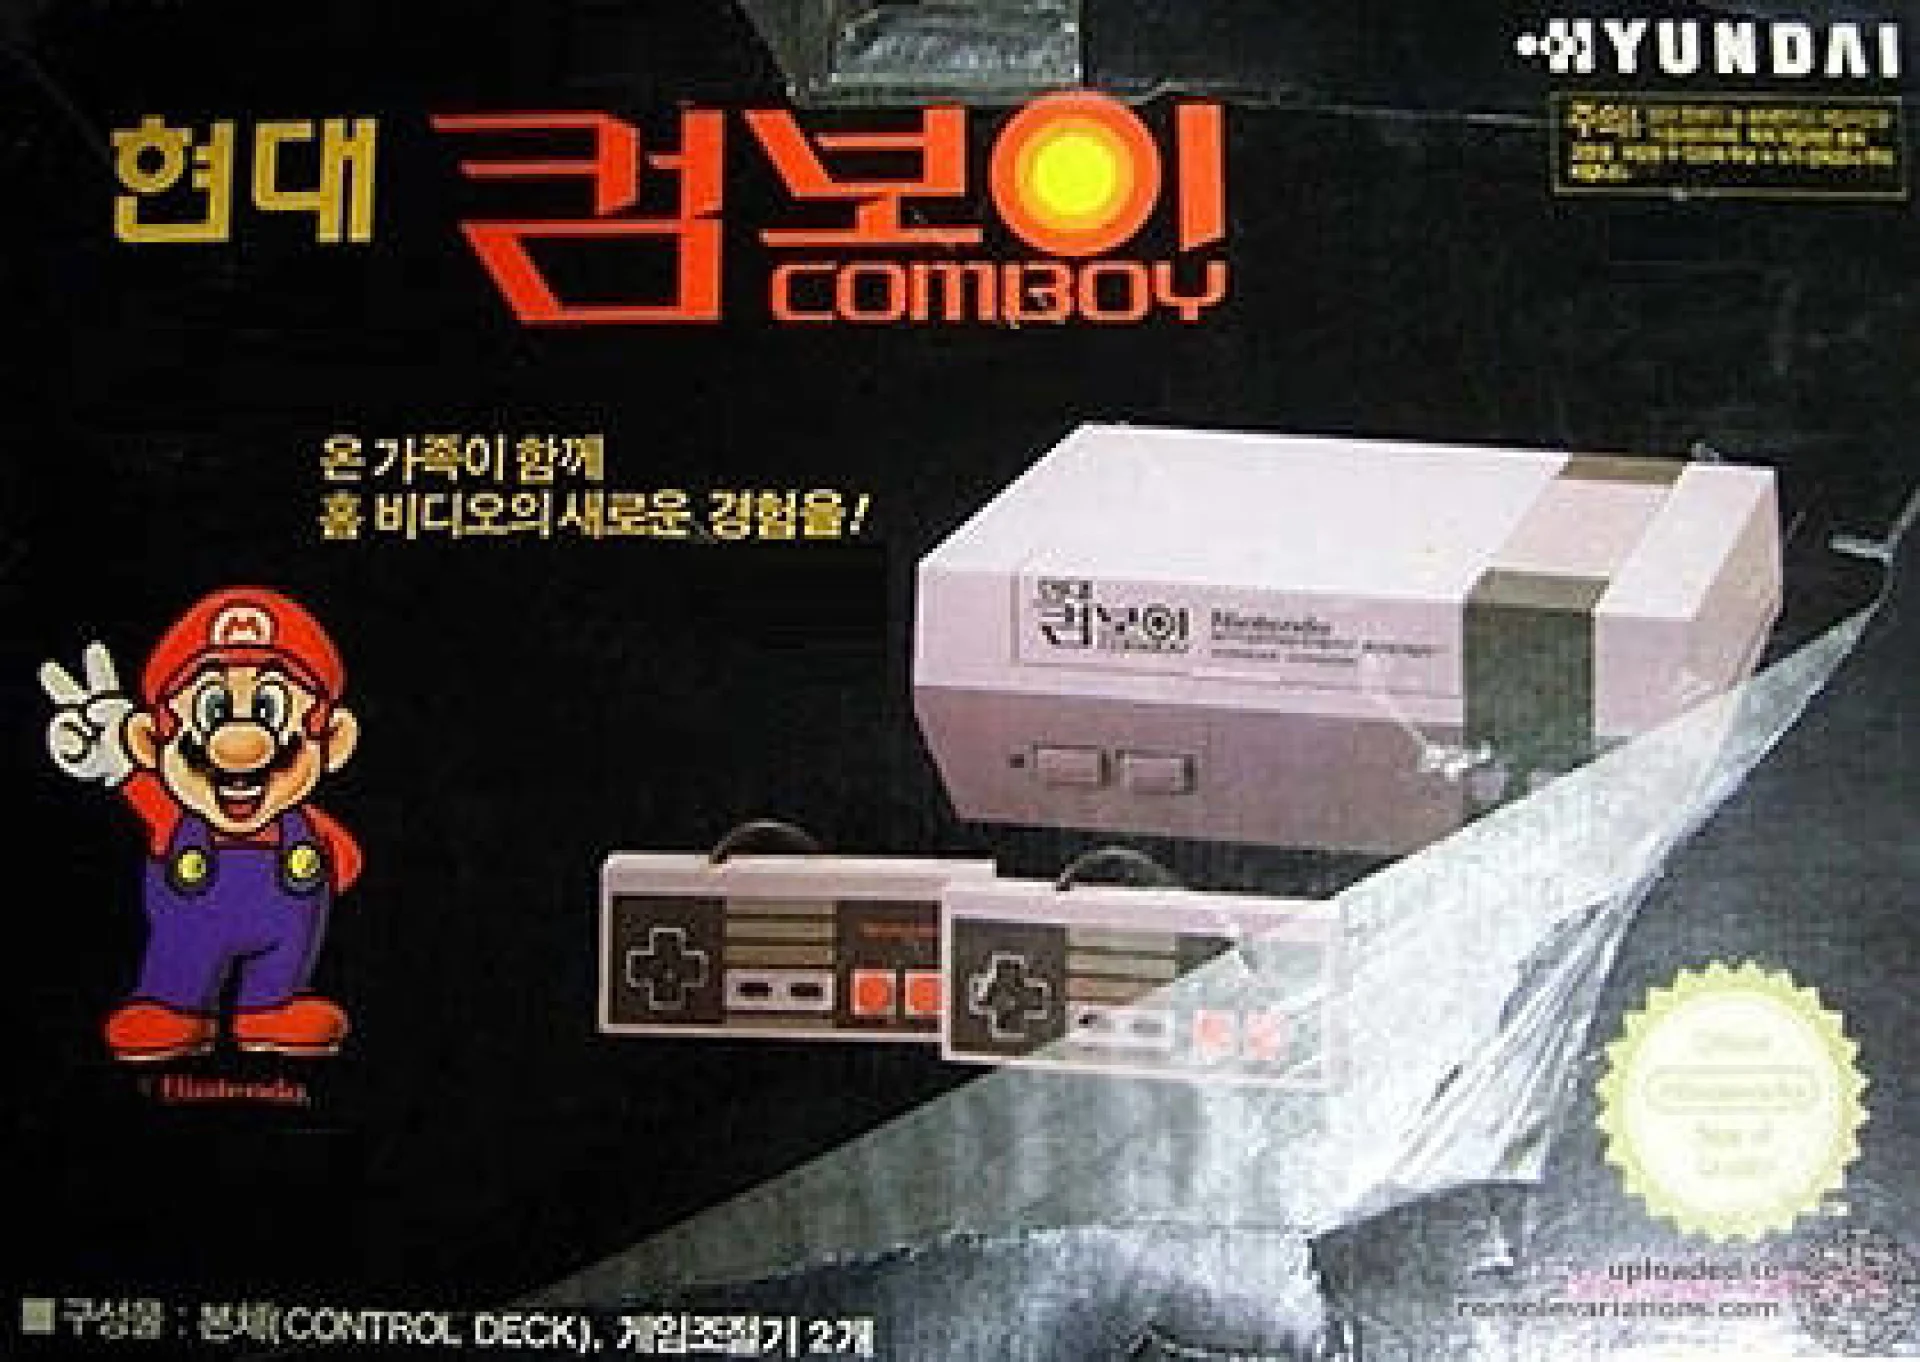 NES Hyundai Comboy Console box